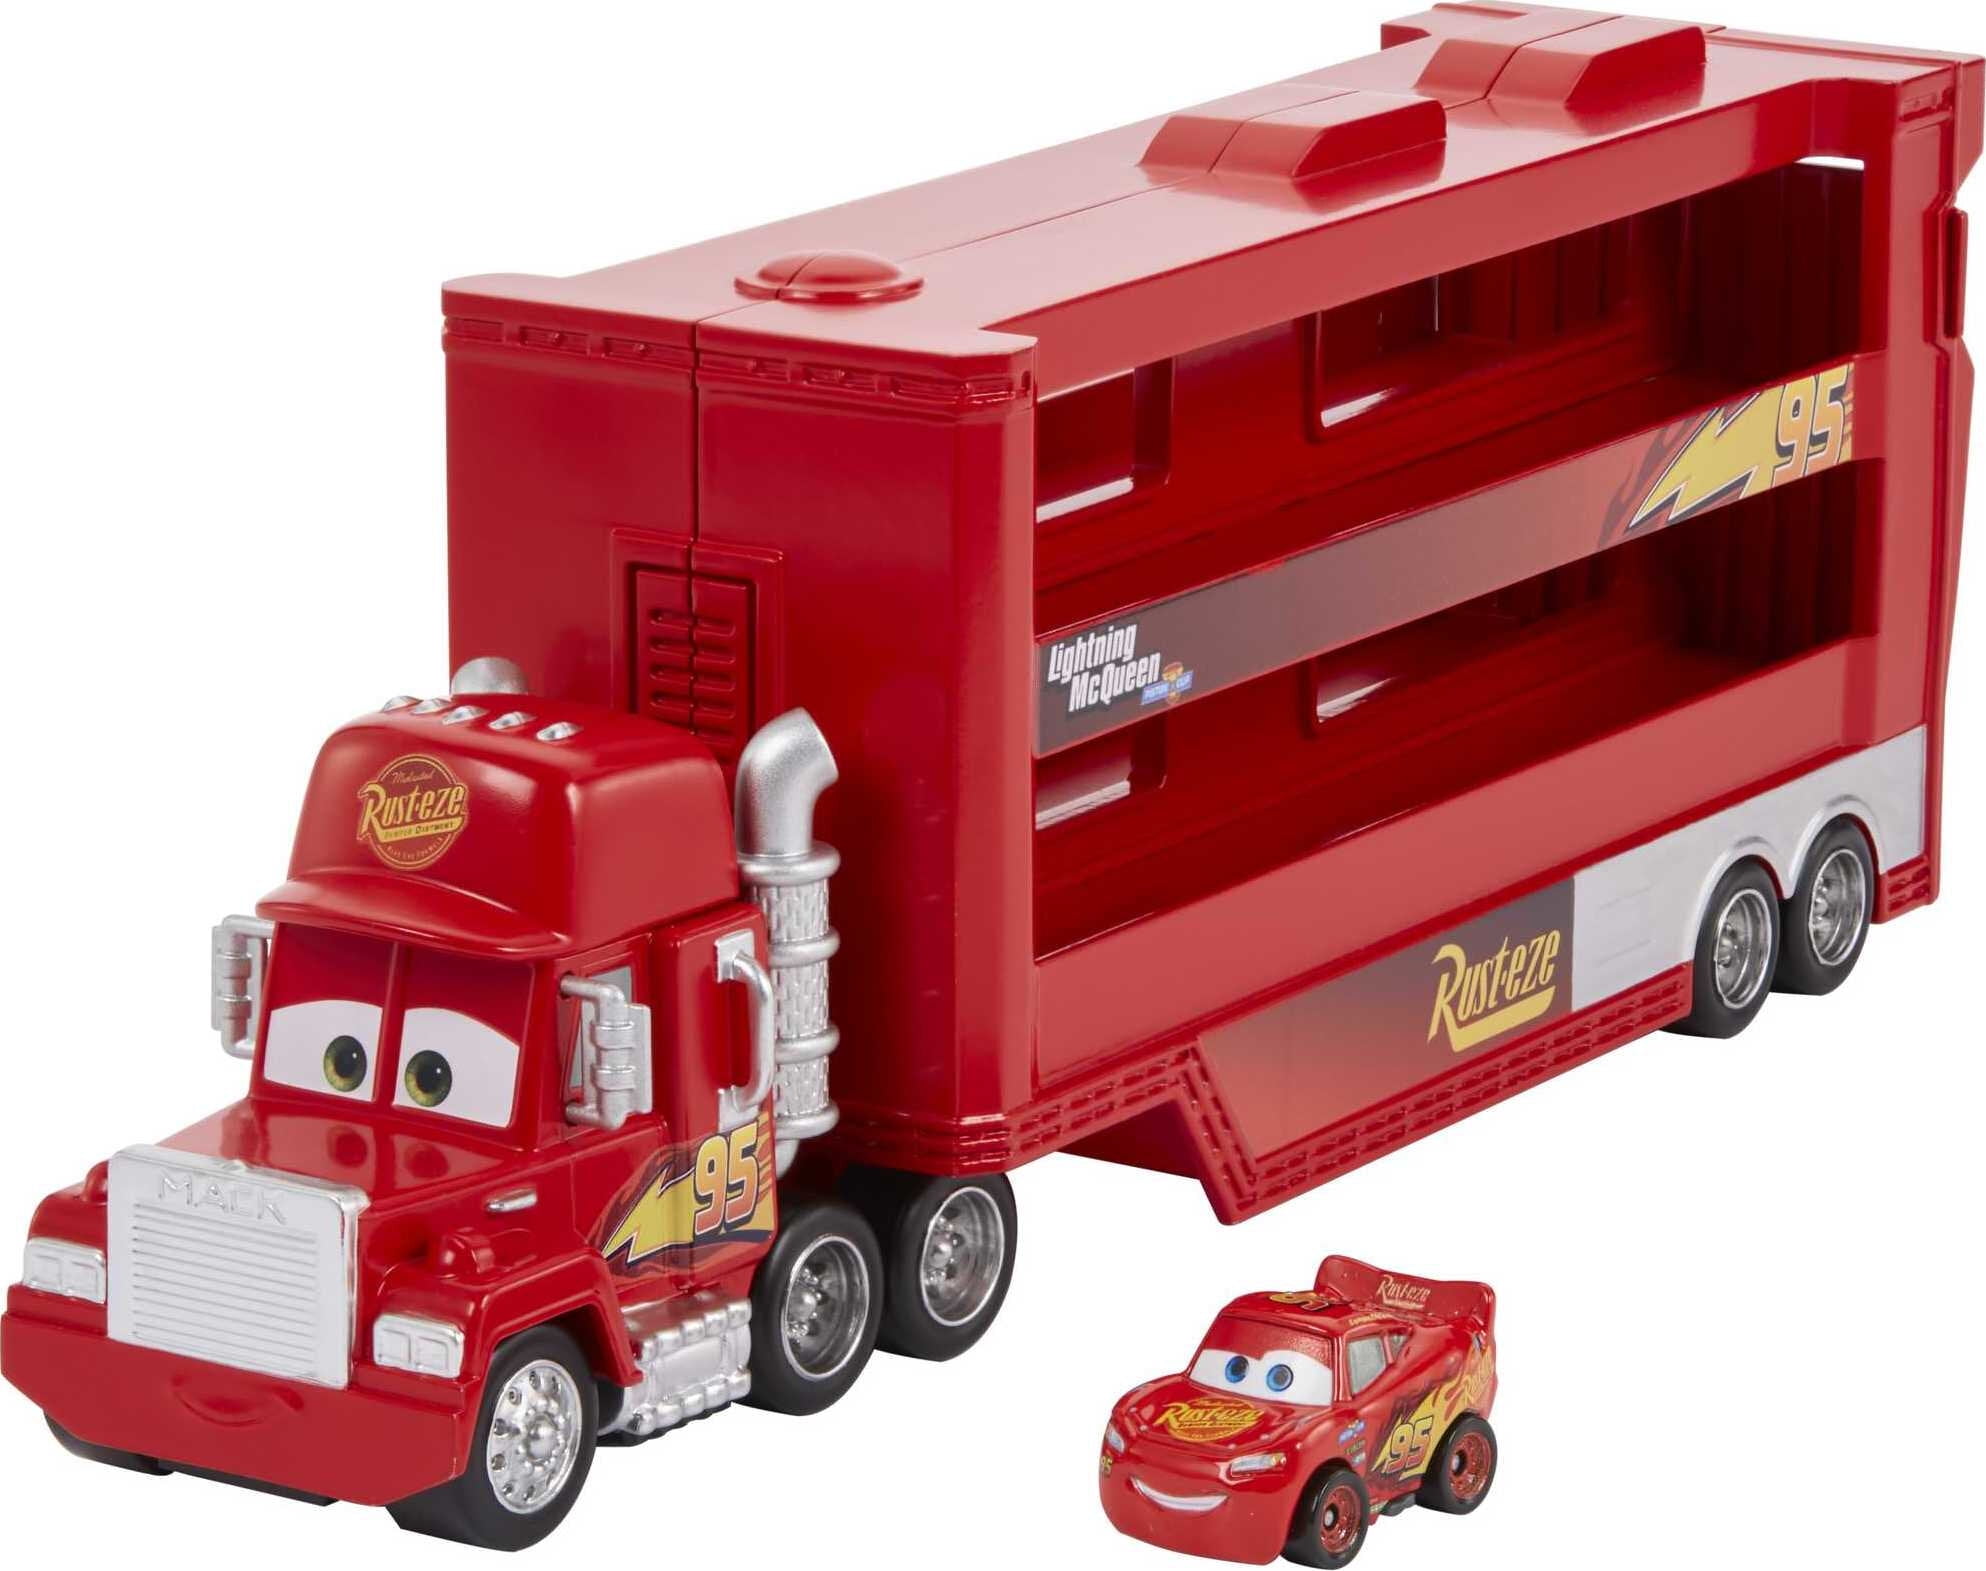 Disney Pixar Cars Jackson McQueen Mack Haulers Truck & Racers Diecast Toy 